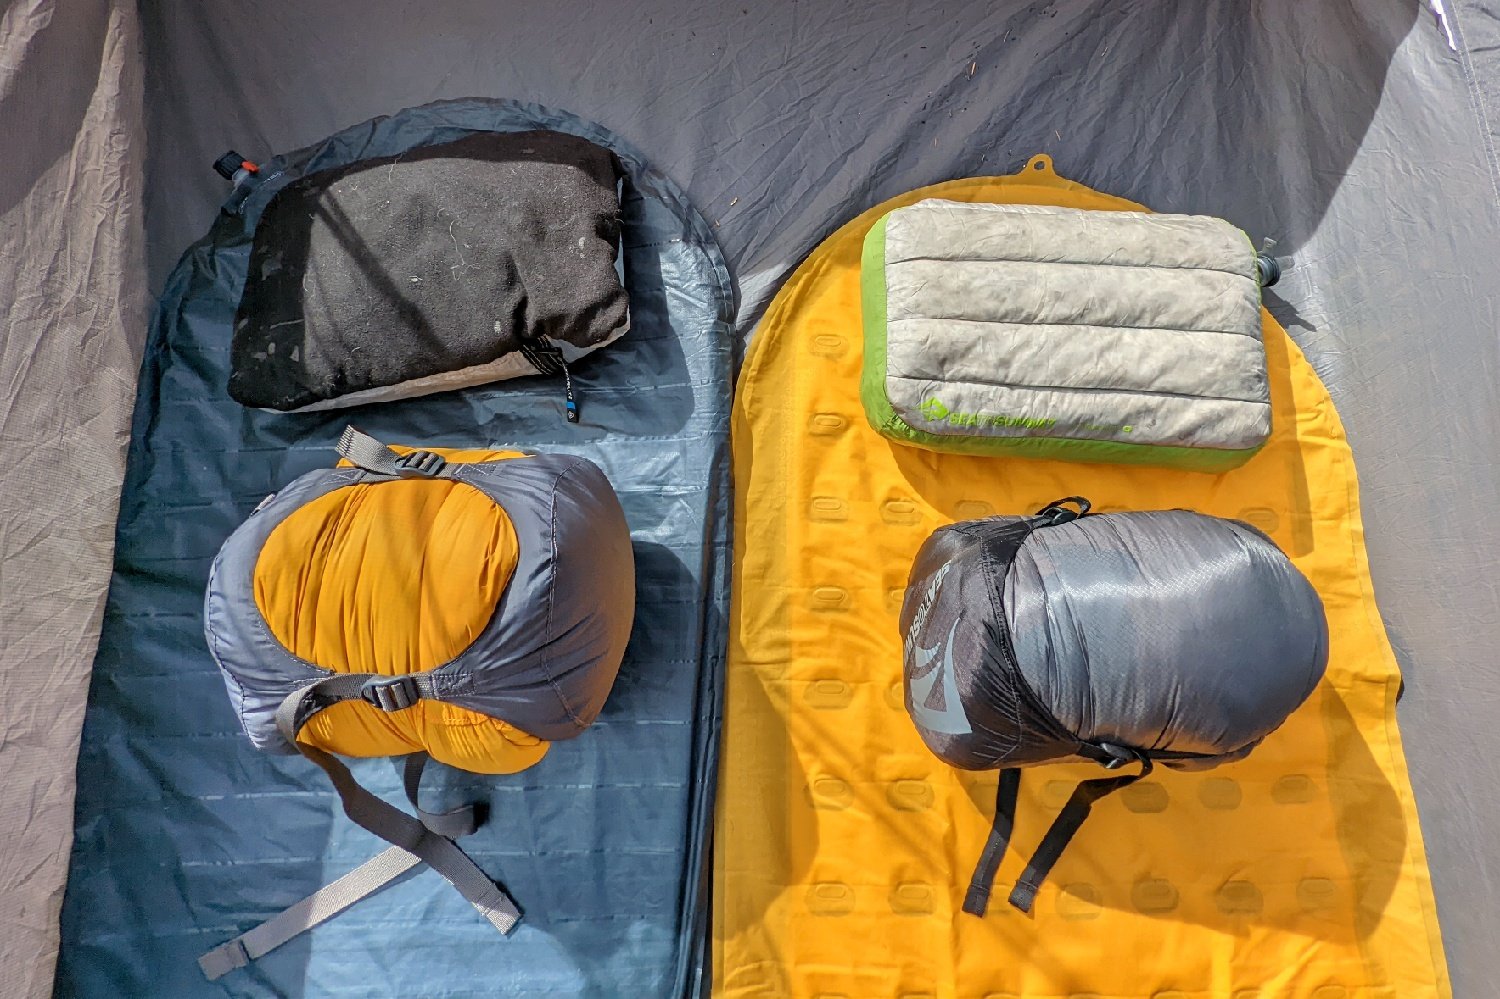 sleep systems set up inside a tent